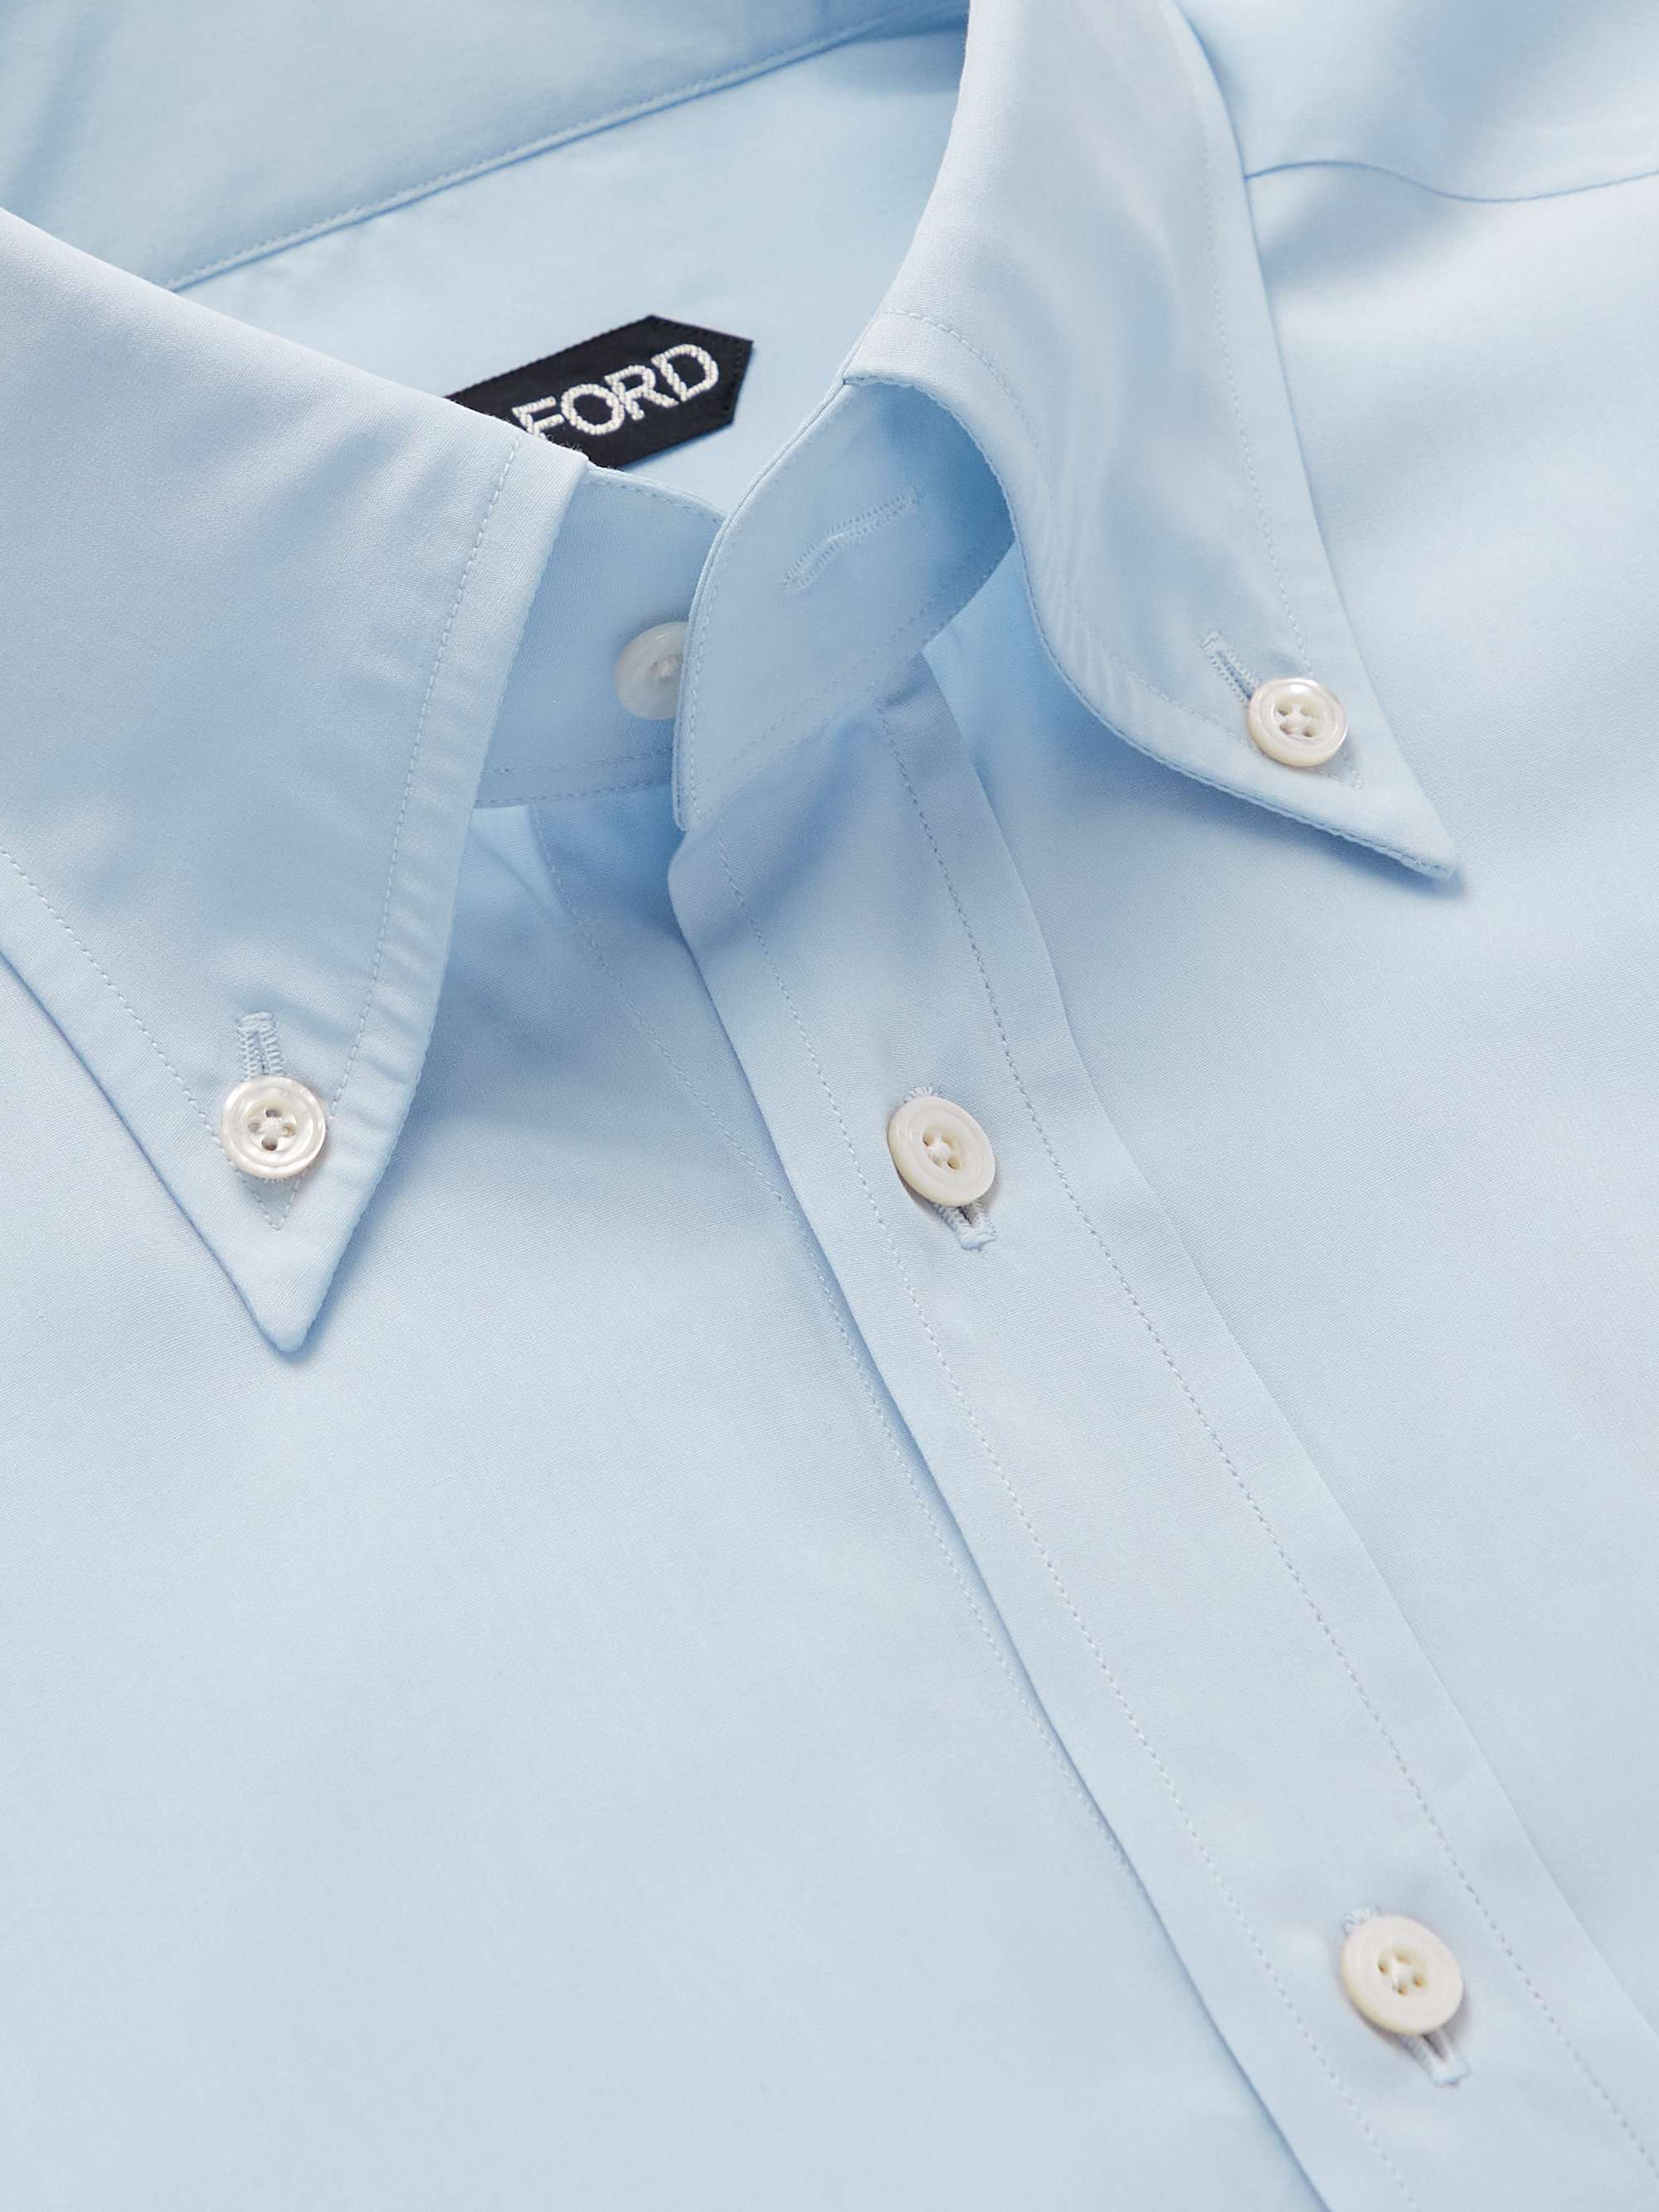 TOM FORD Button-Down Collar Lyocell-Blend Shirt